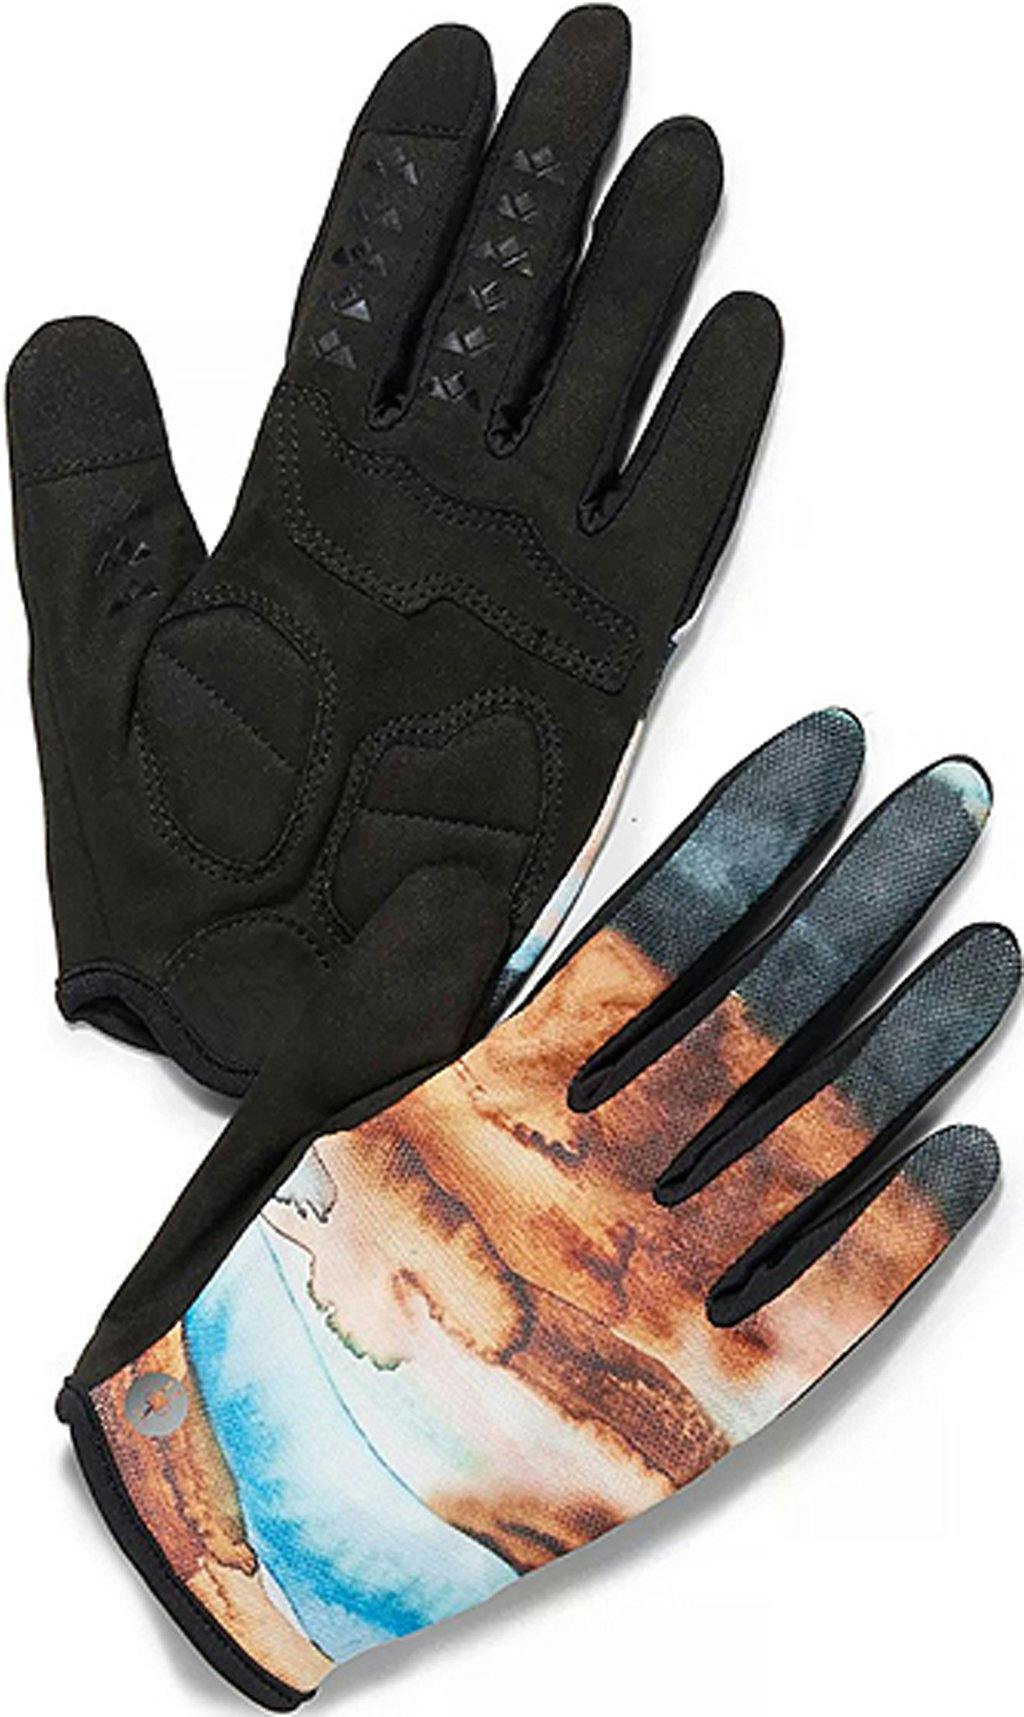 Product image for Mountain Bike Gloves - Unisex